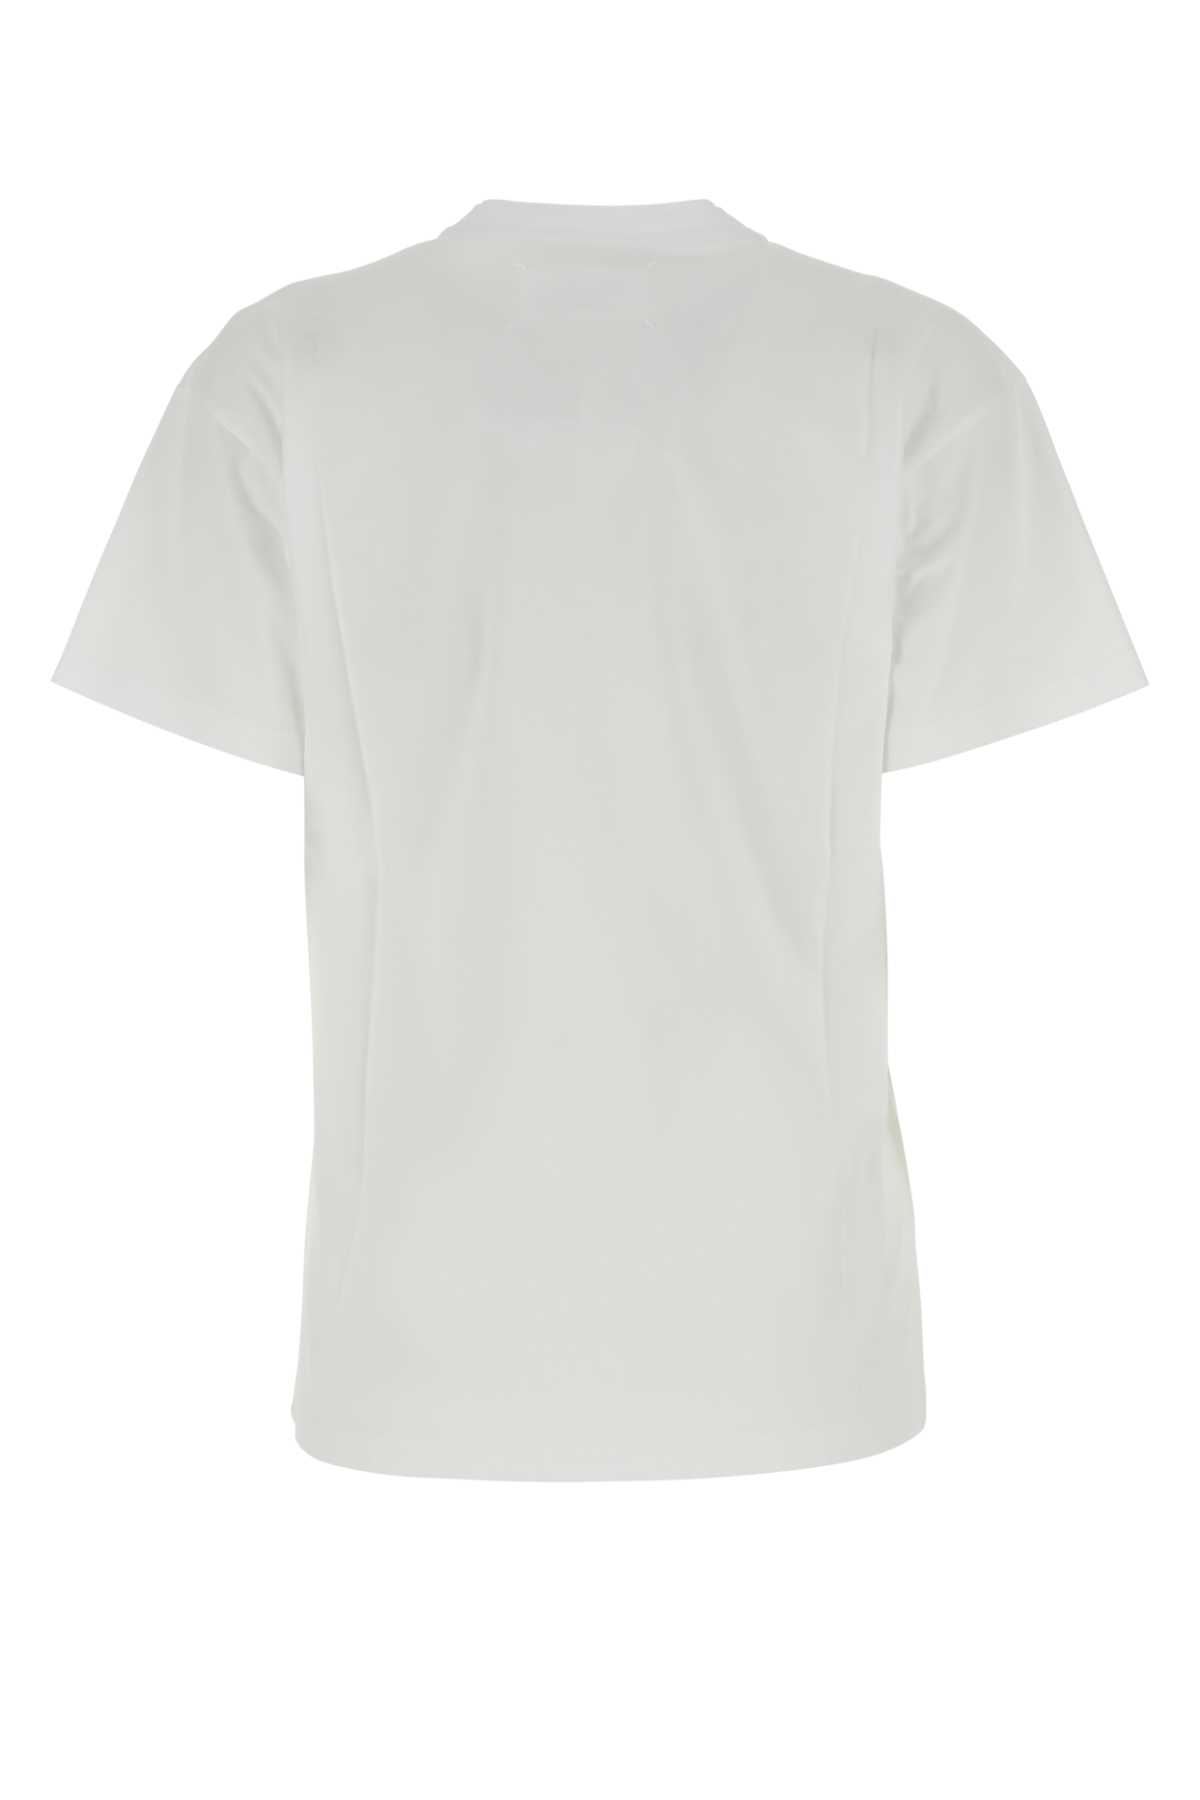 Maison Margiela White Cotton T-shirt In 100